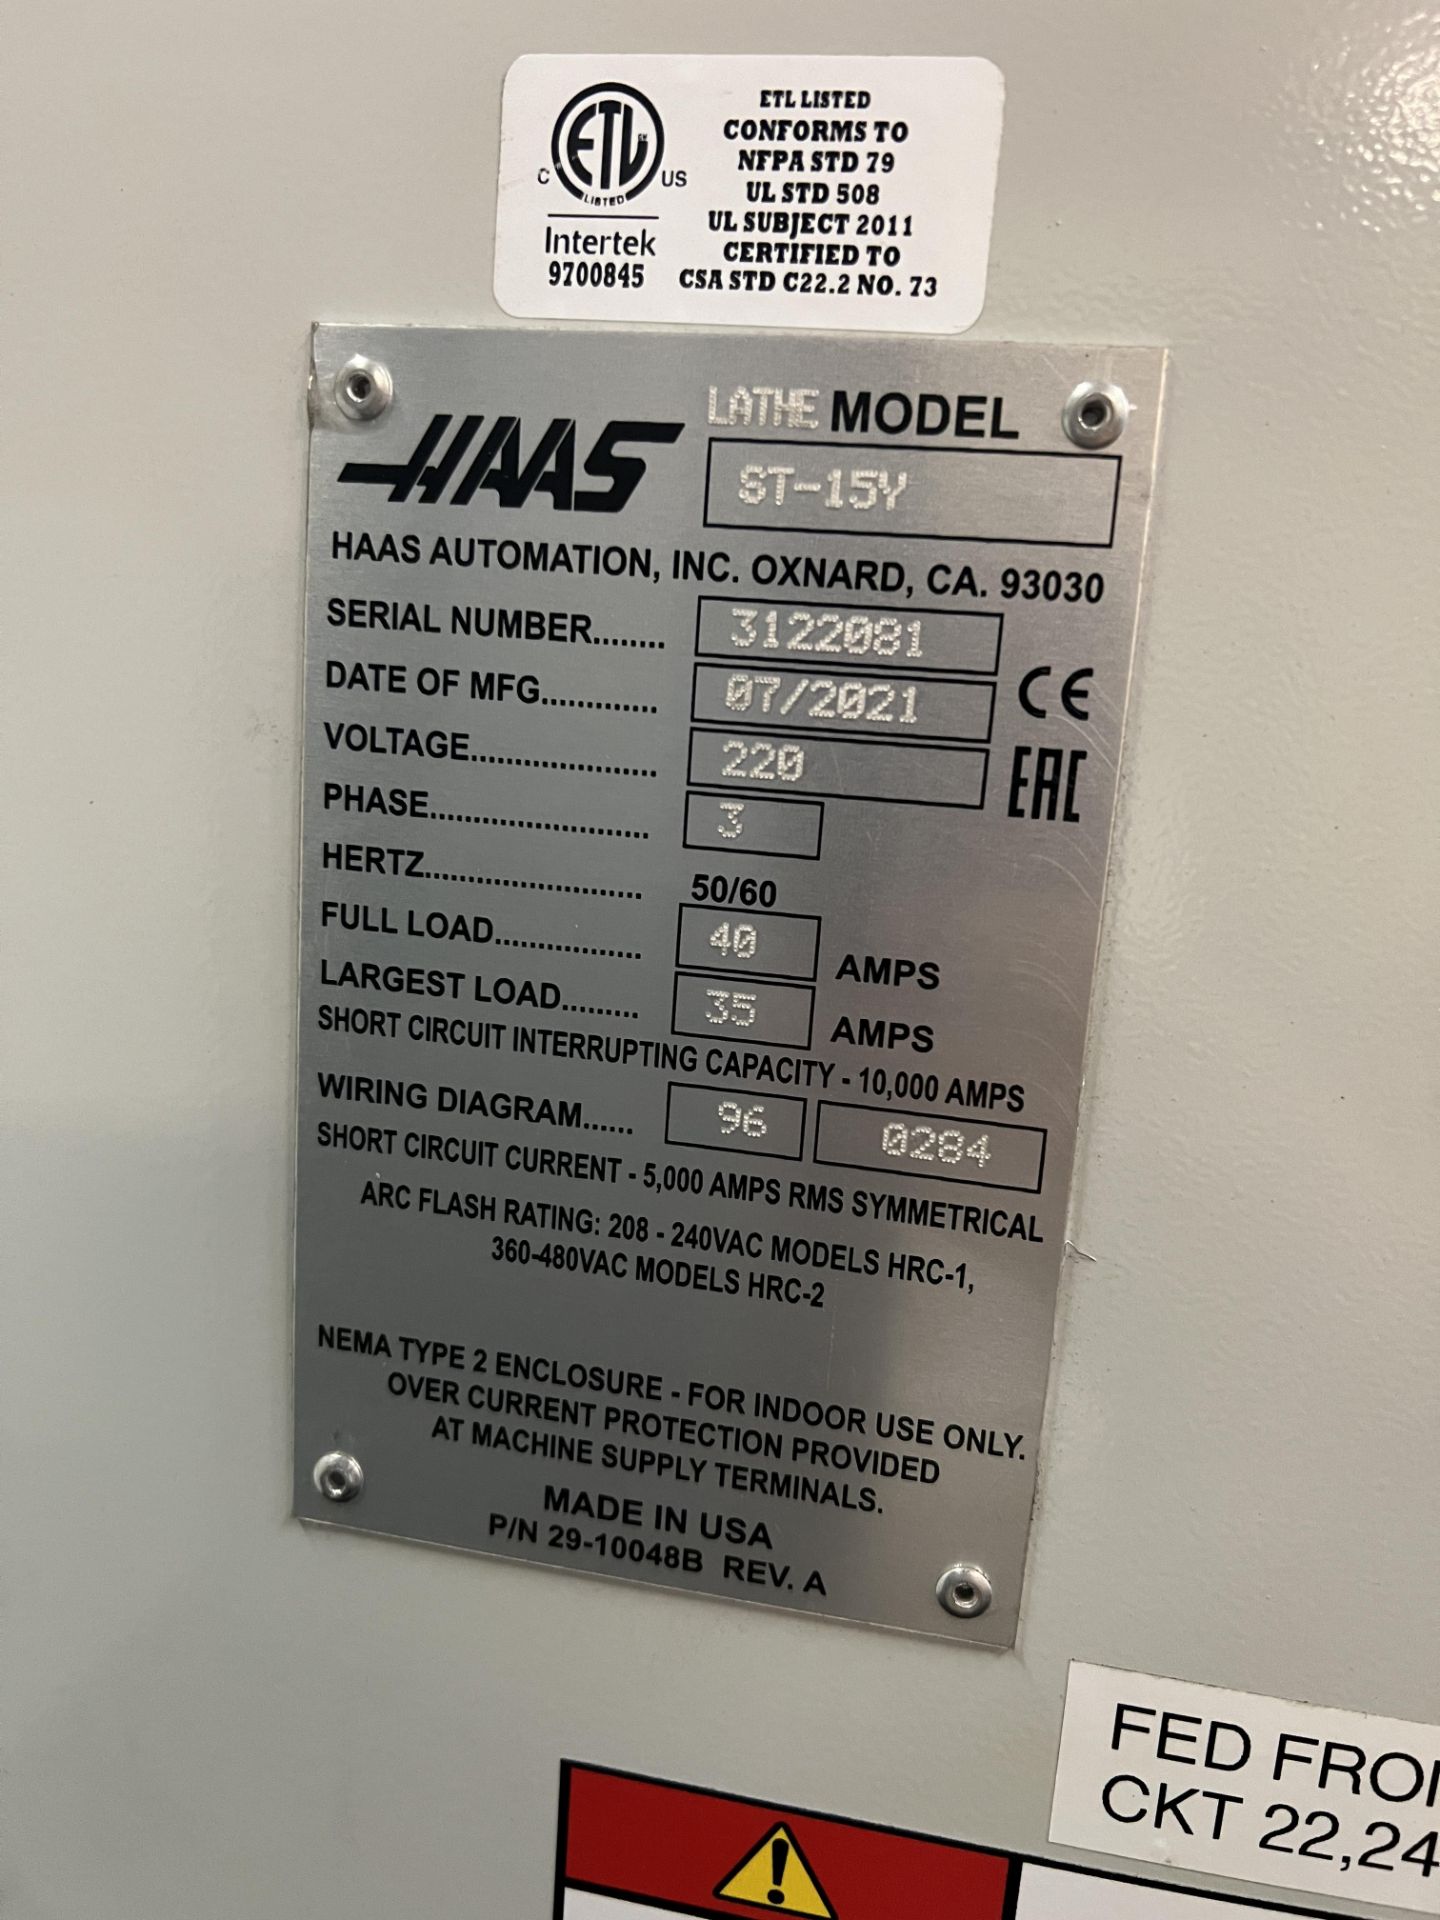 Haas ST-15Y CNC Lathe, S/N 3122081, 2021 - Image 7 of 21